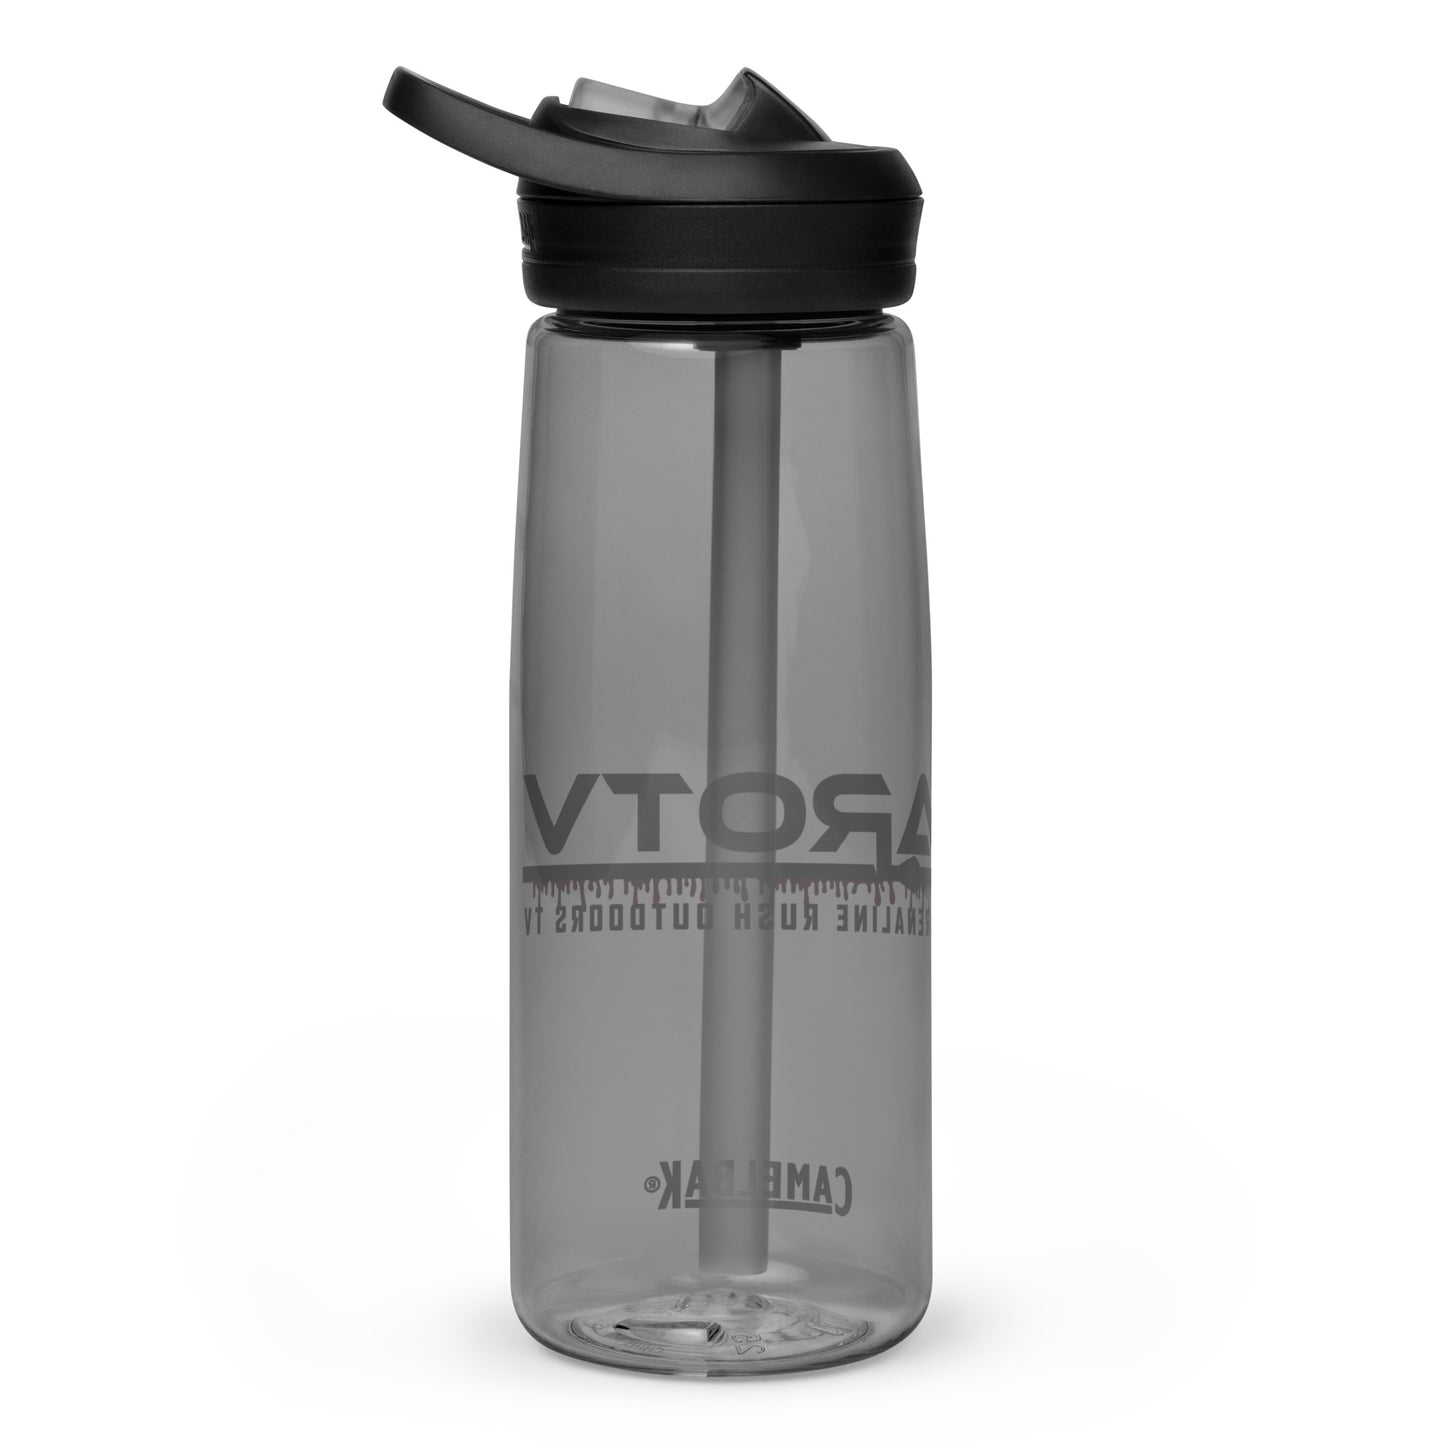 AROTV Sports Water Bottle